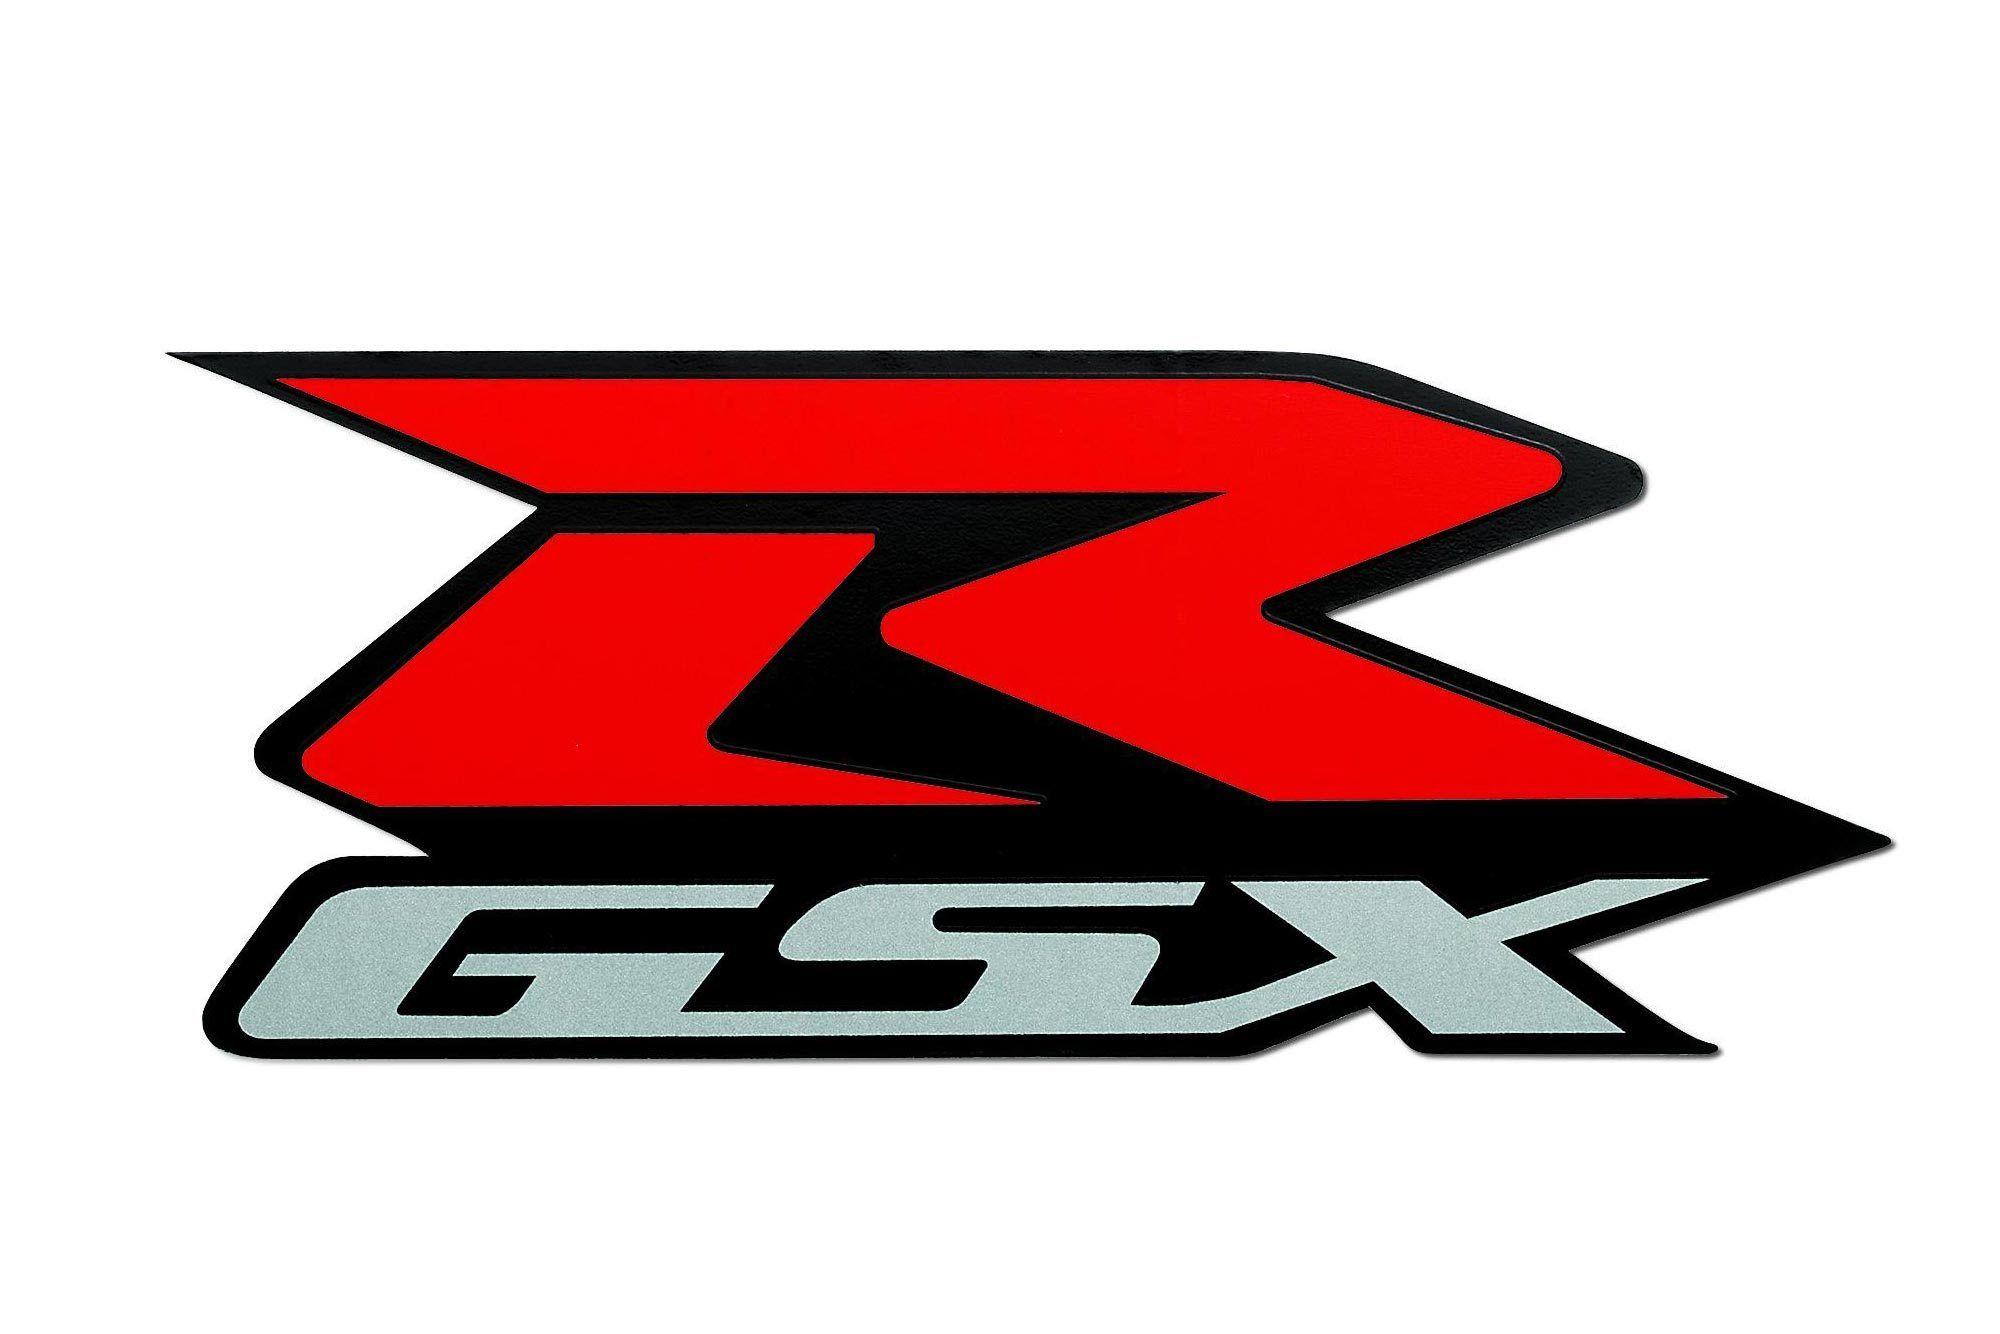 GSX Logo - gsx-r-logo - BikesRepublic